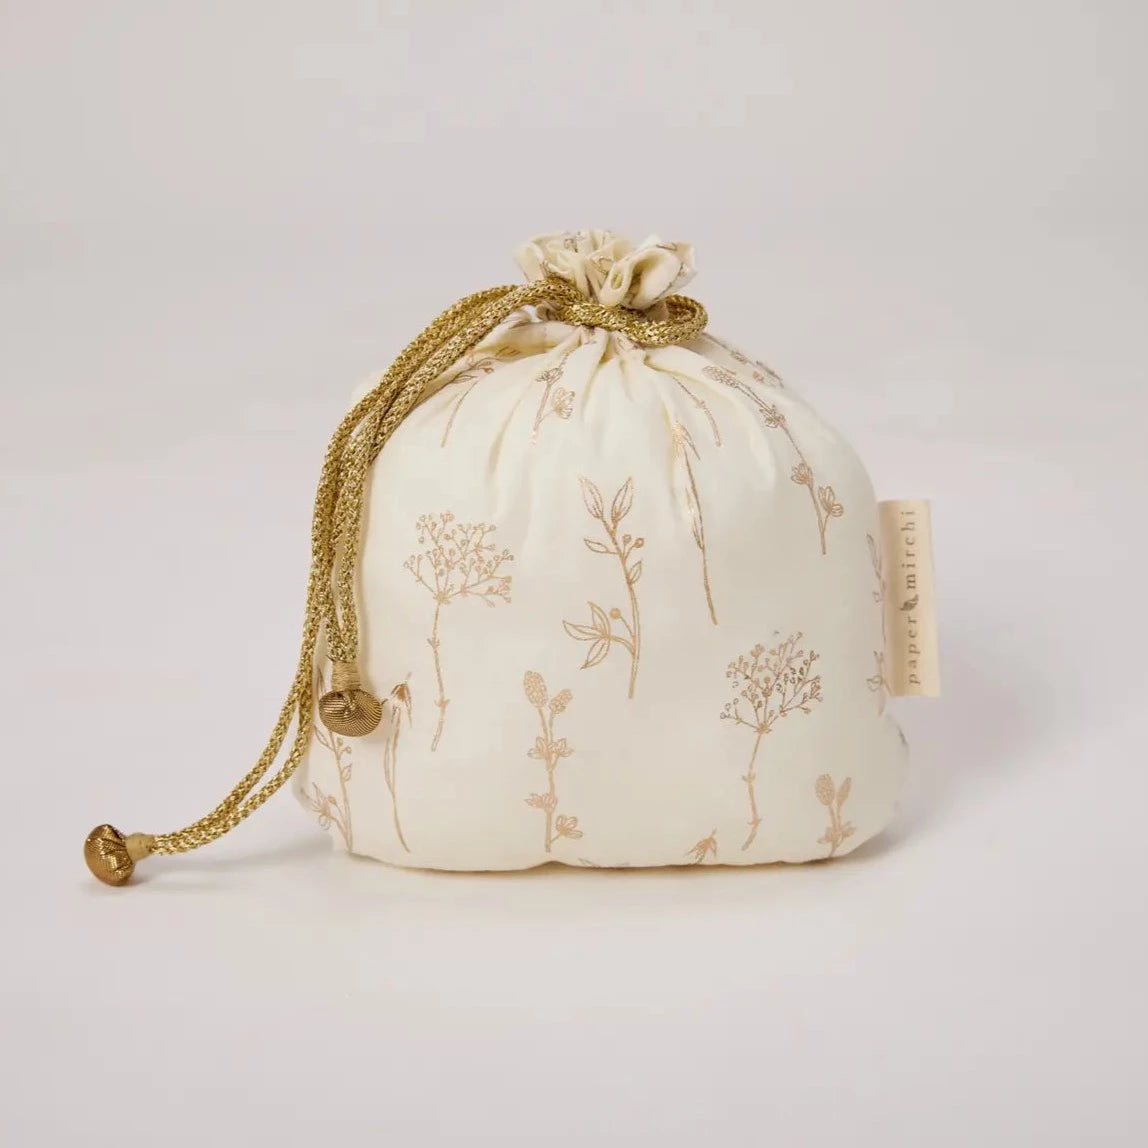 Fabric Gift Bag - Wildflowers